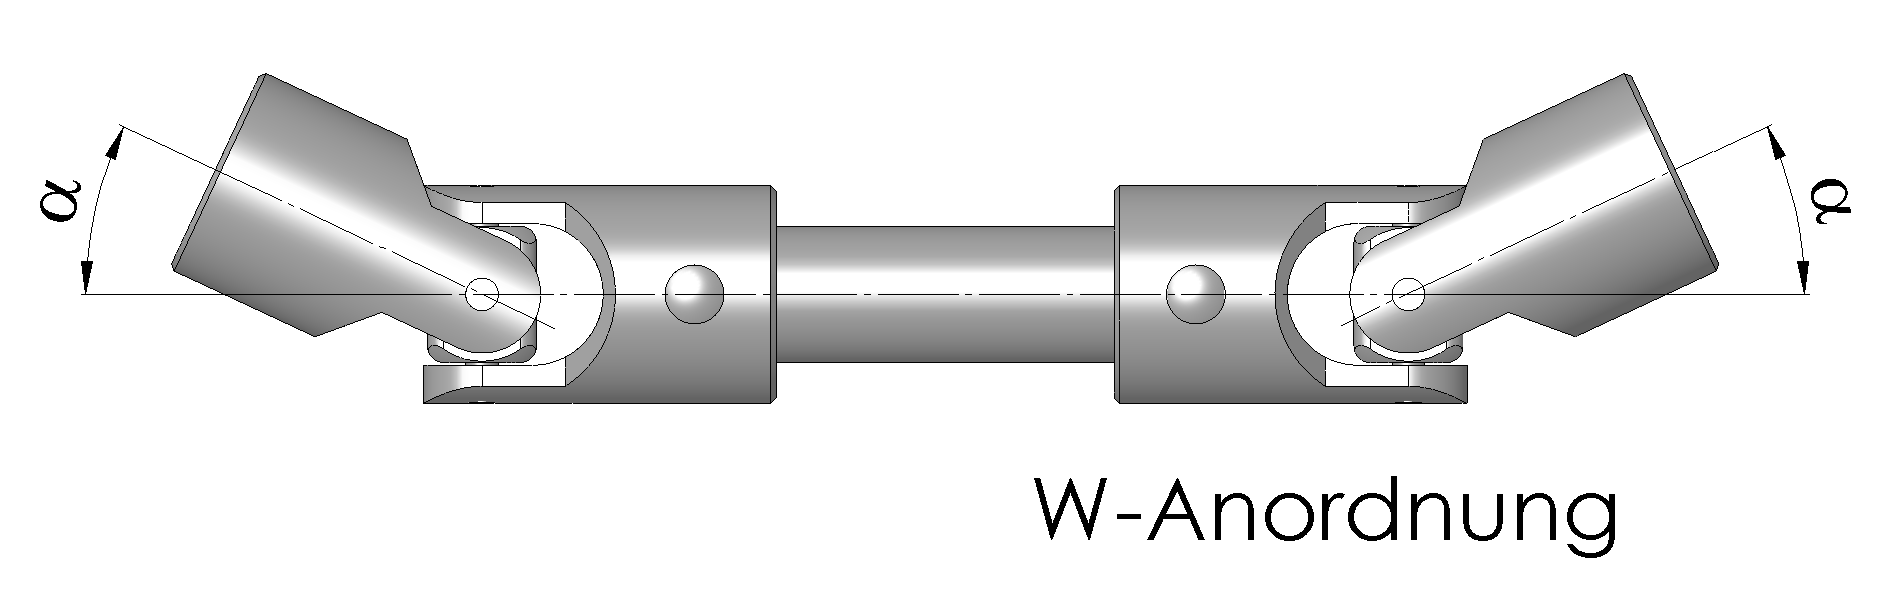 File:Cardan-joint intermediate-shaft w-arrangement rated de.png - Wikimedia  Commons